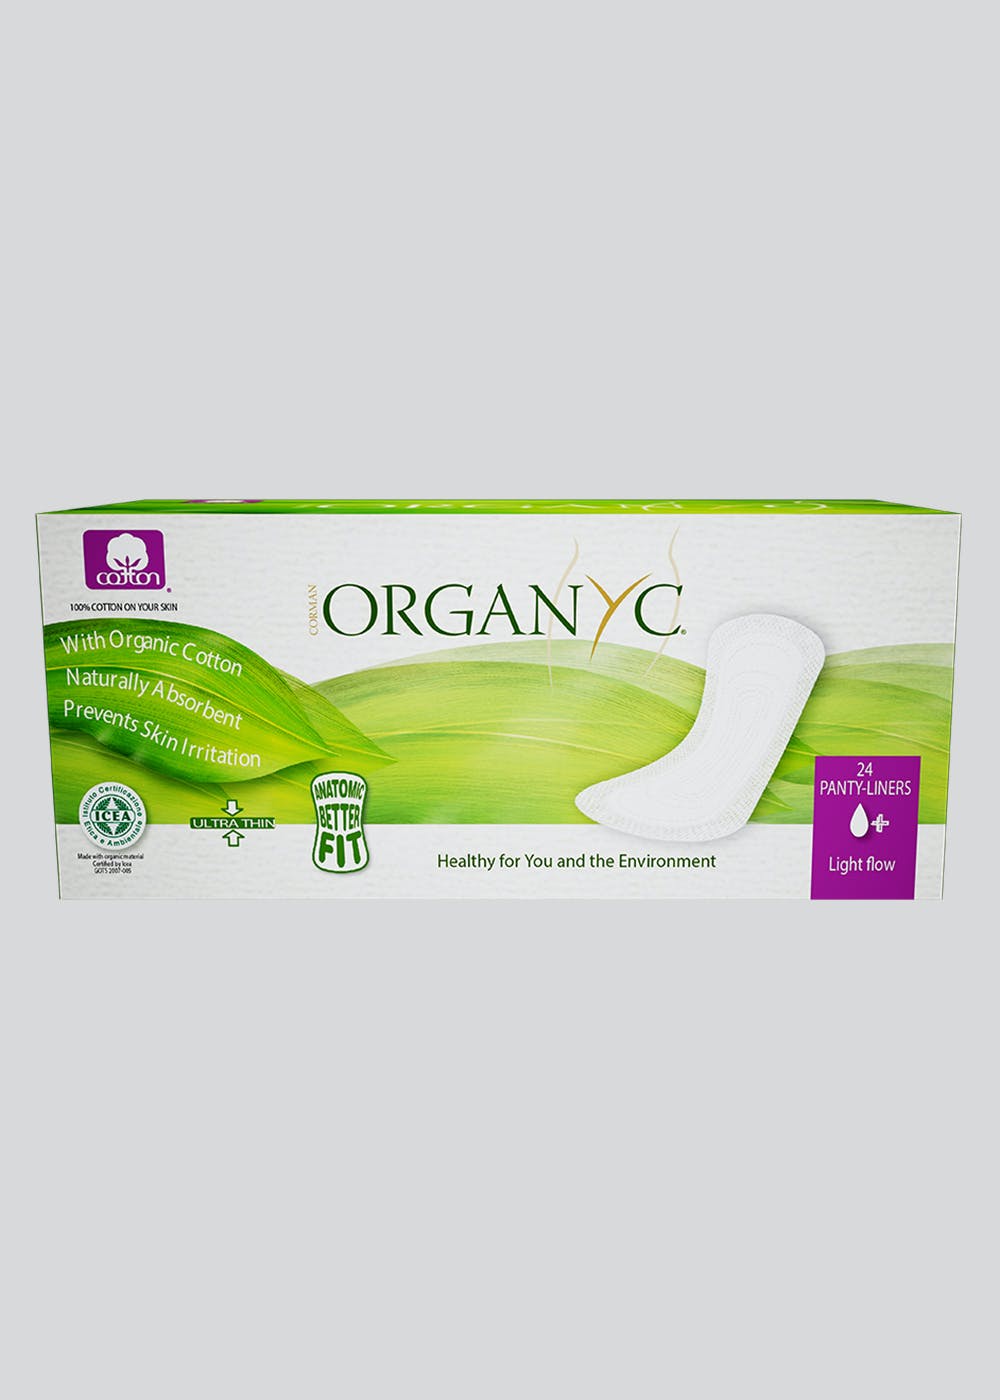 Organyc 100% Certified Organic Cotton Panty Liner, Light Flow, 24